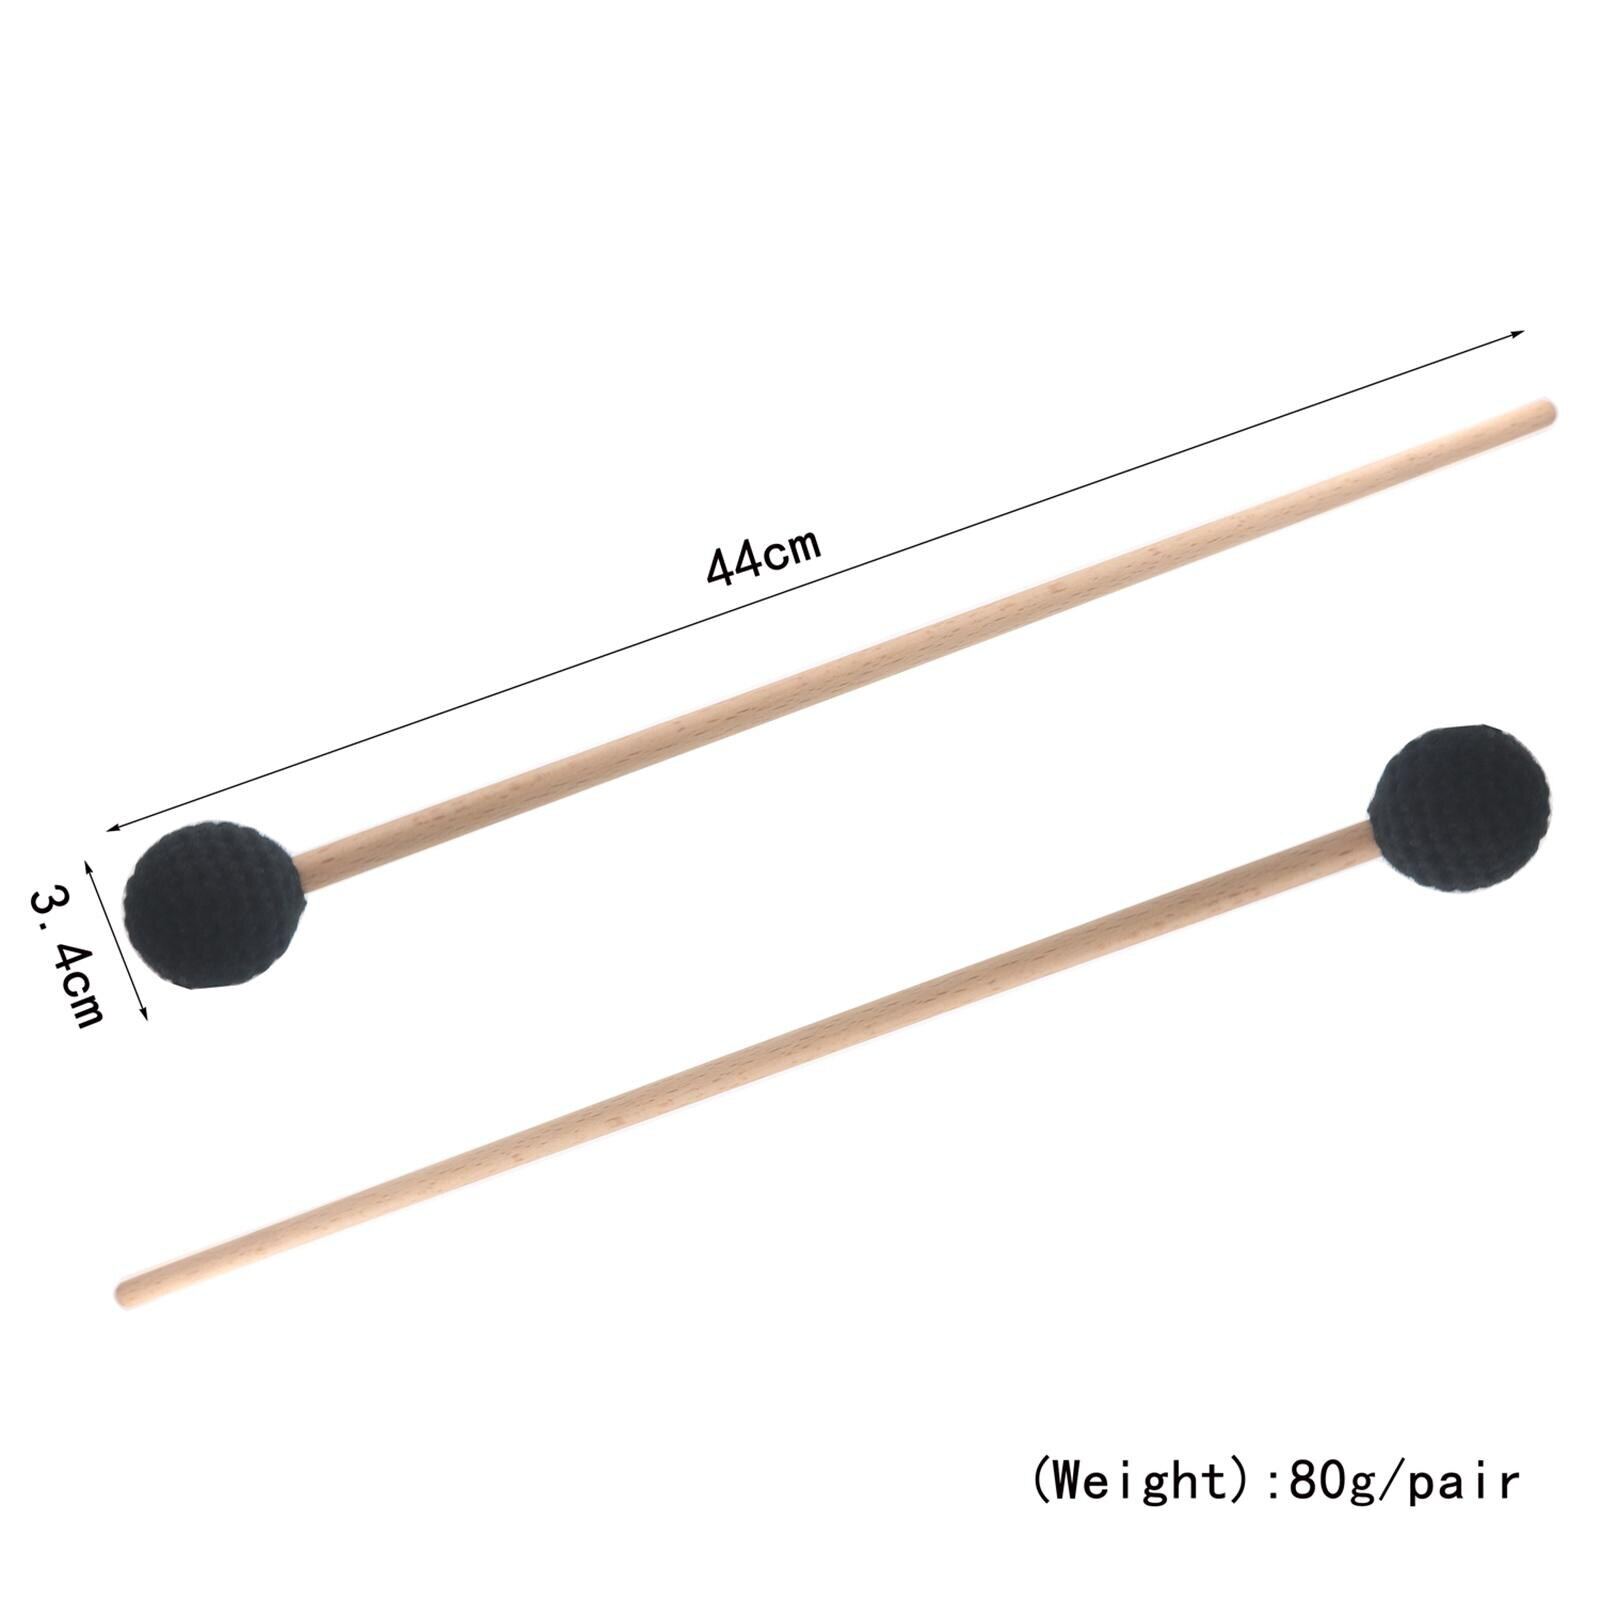 2 Pieces Percussion Mallets Sticks Percussion Instrument Kit Glockenspiel Sticks for Gong Woodblock Drum Bells Glockenspiel